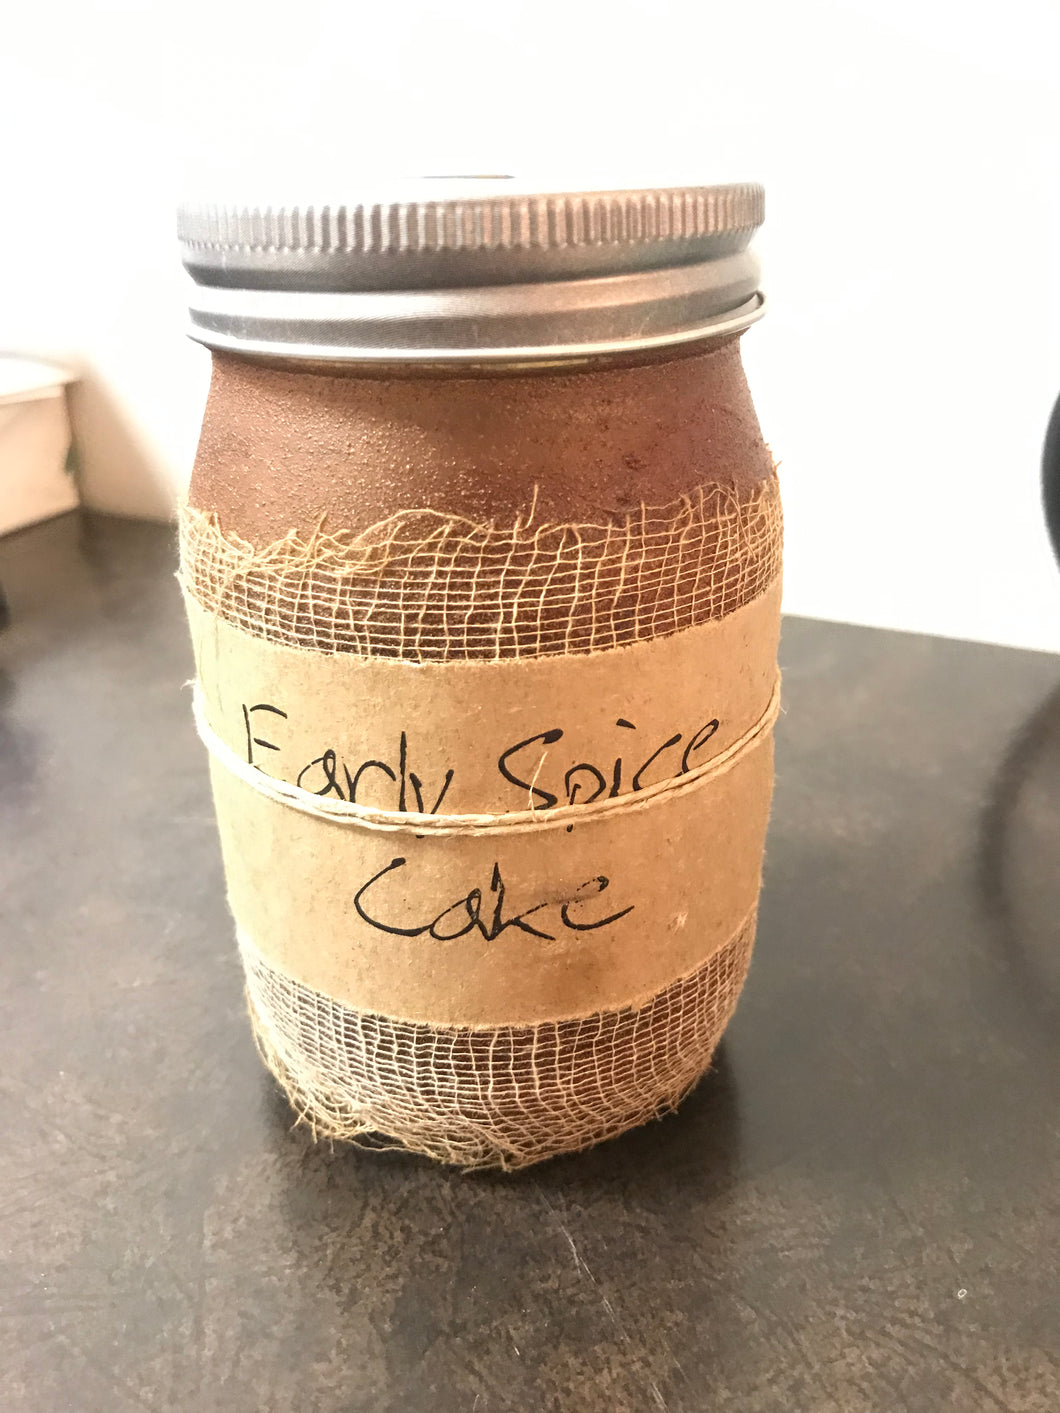 Early Spice Cake 16 oz Jar Candle